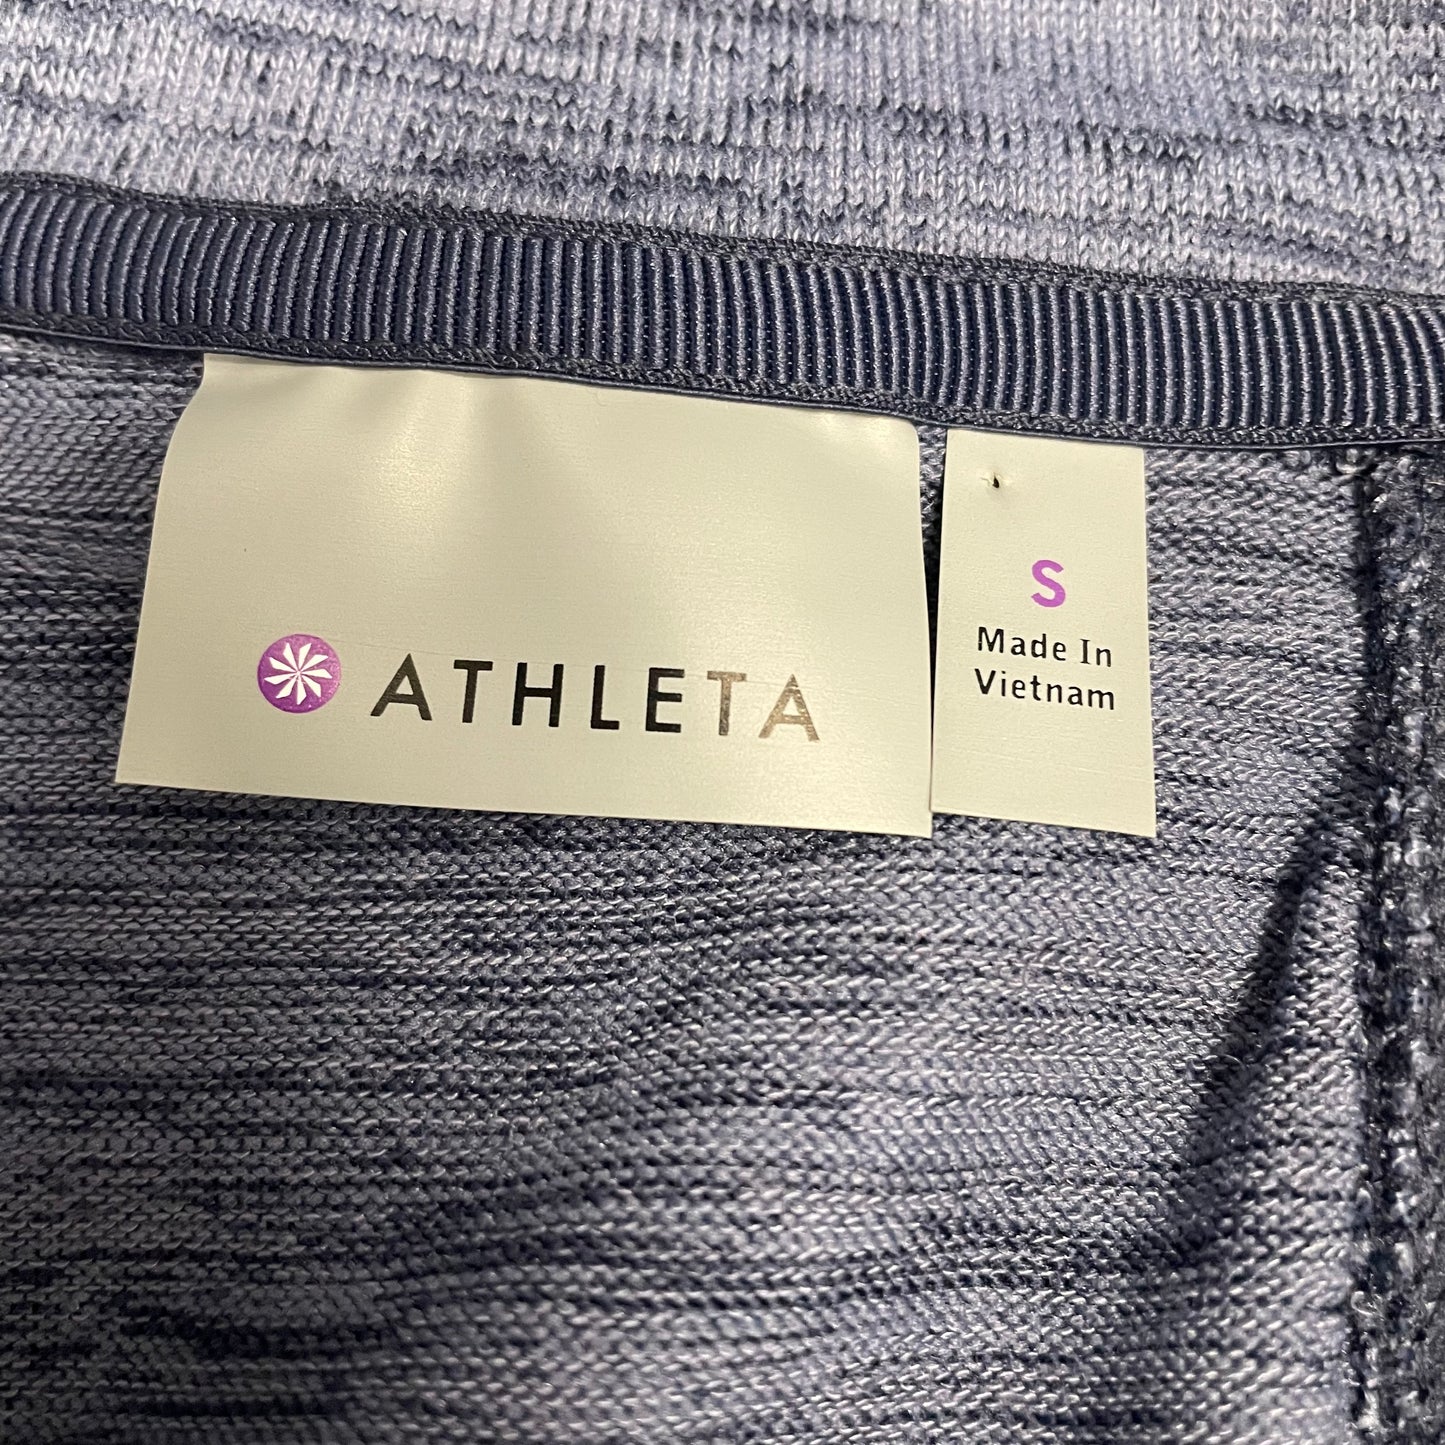 Athletic Jacket By Athleta  Size: S